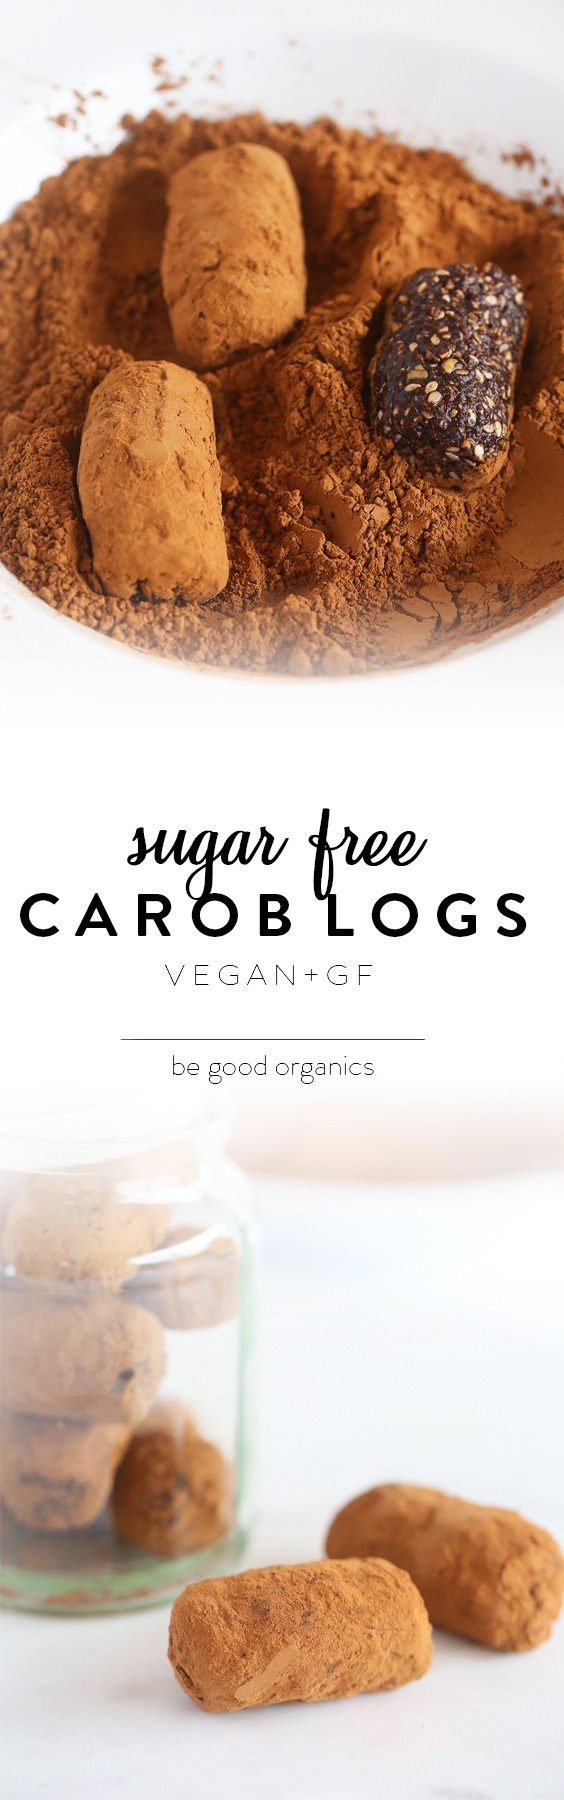 Sugar free CAROB LOGS - plant based, vegan, dairy free, gluten free, zero sugar, raw, protein-packed, 10 minutes, easy, begoodorganics